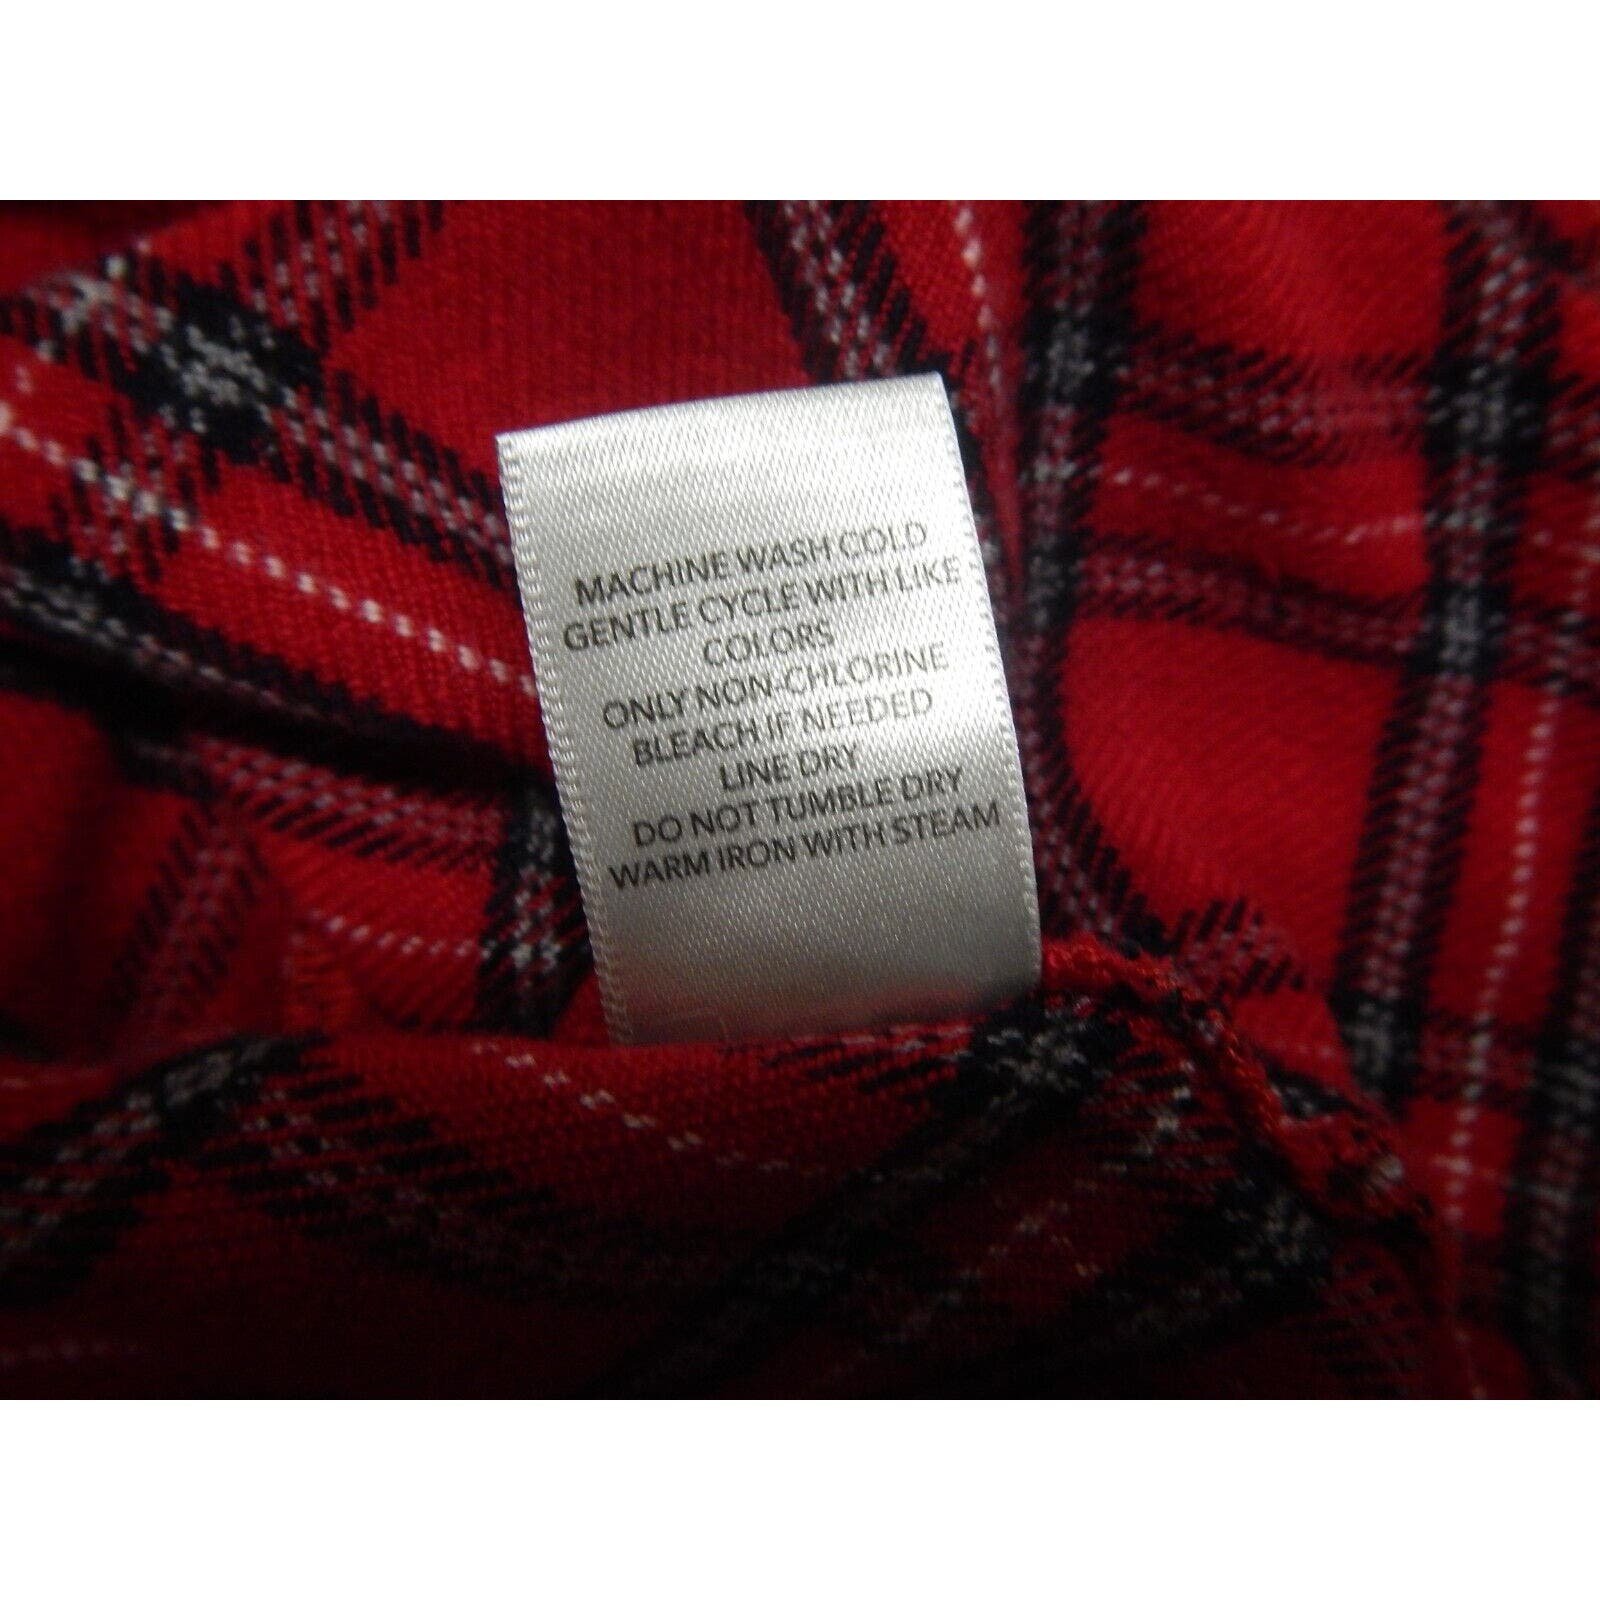 Cheap Christopher Banks Flannel Shirt Women´s Size XL Red Black Plaid Button Up OyxjfEHpB on sale